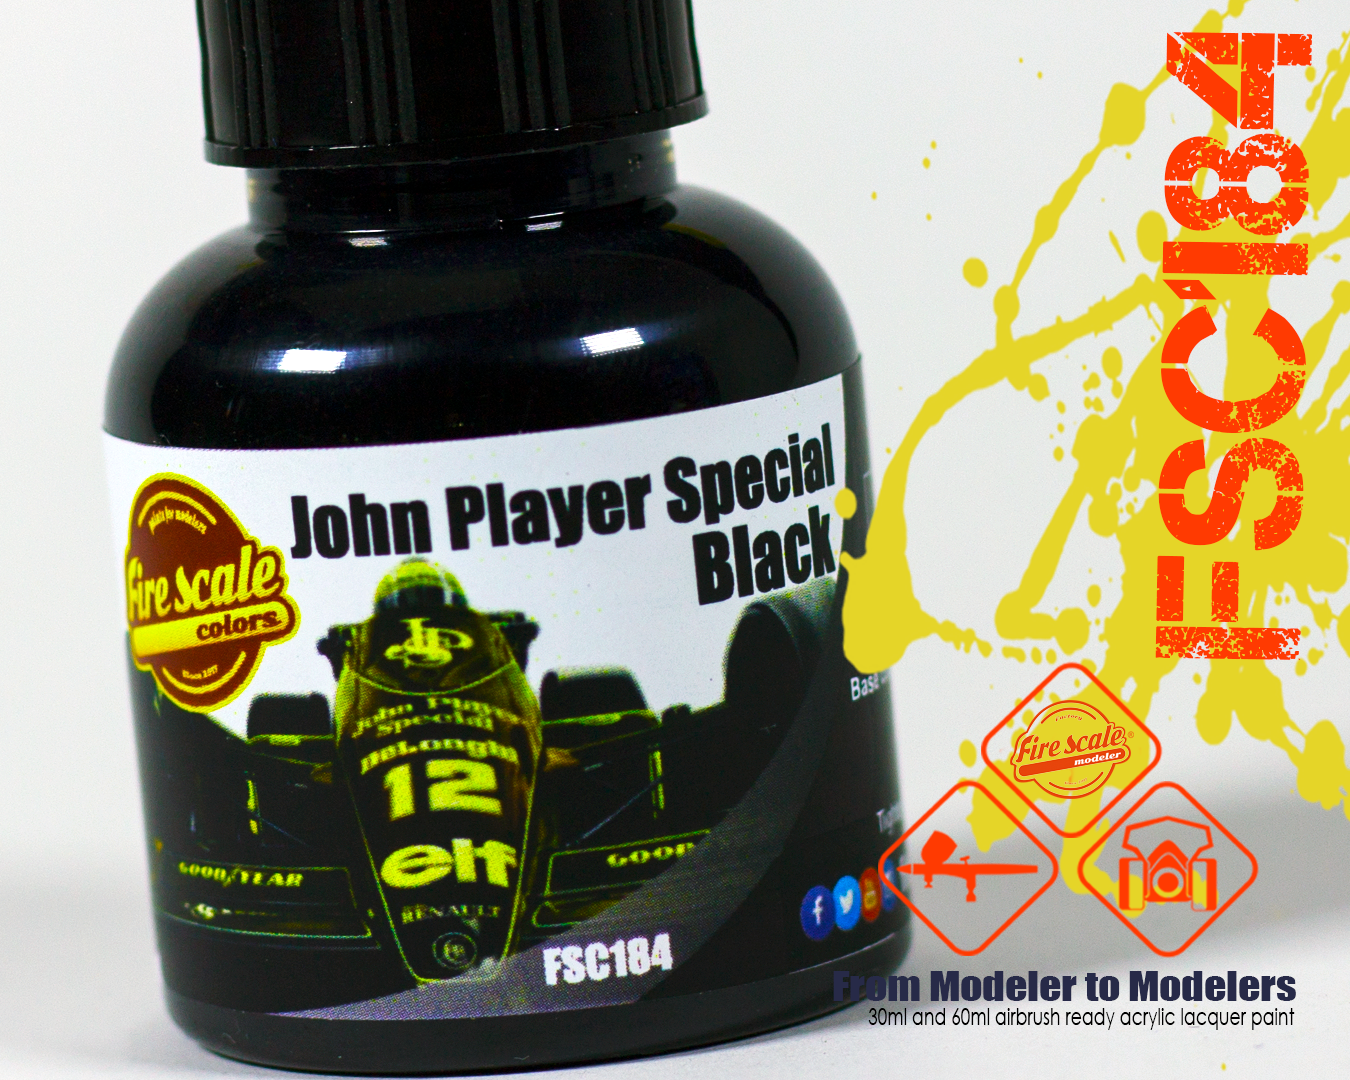 John Player Special Black